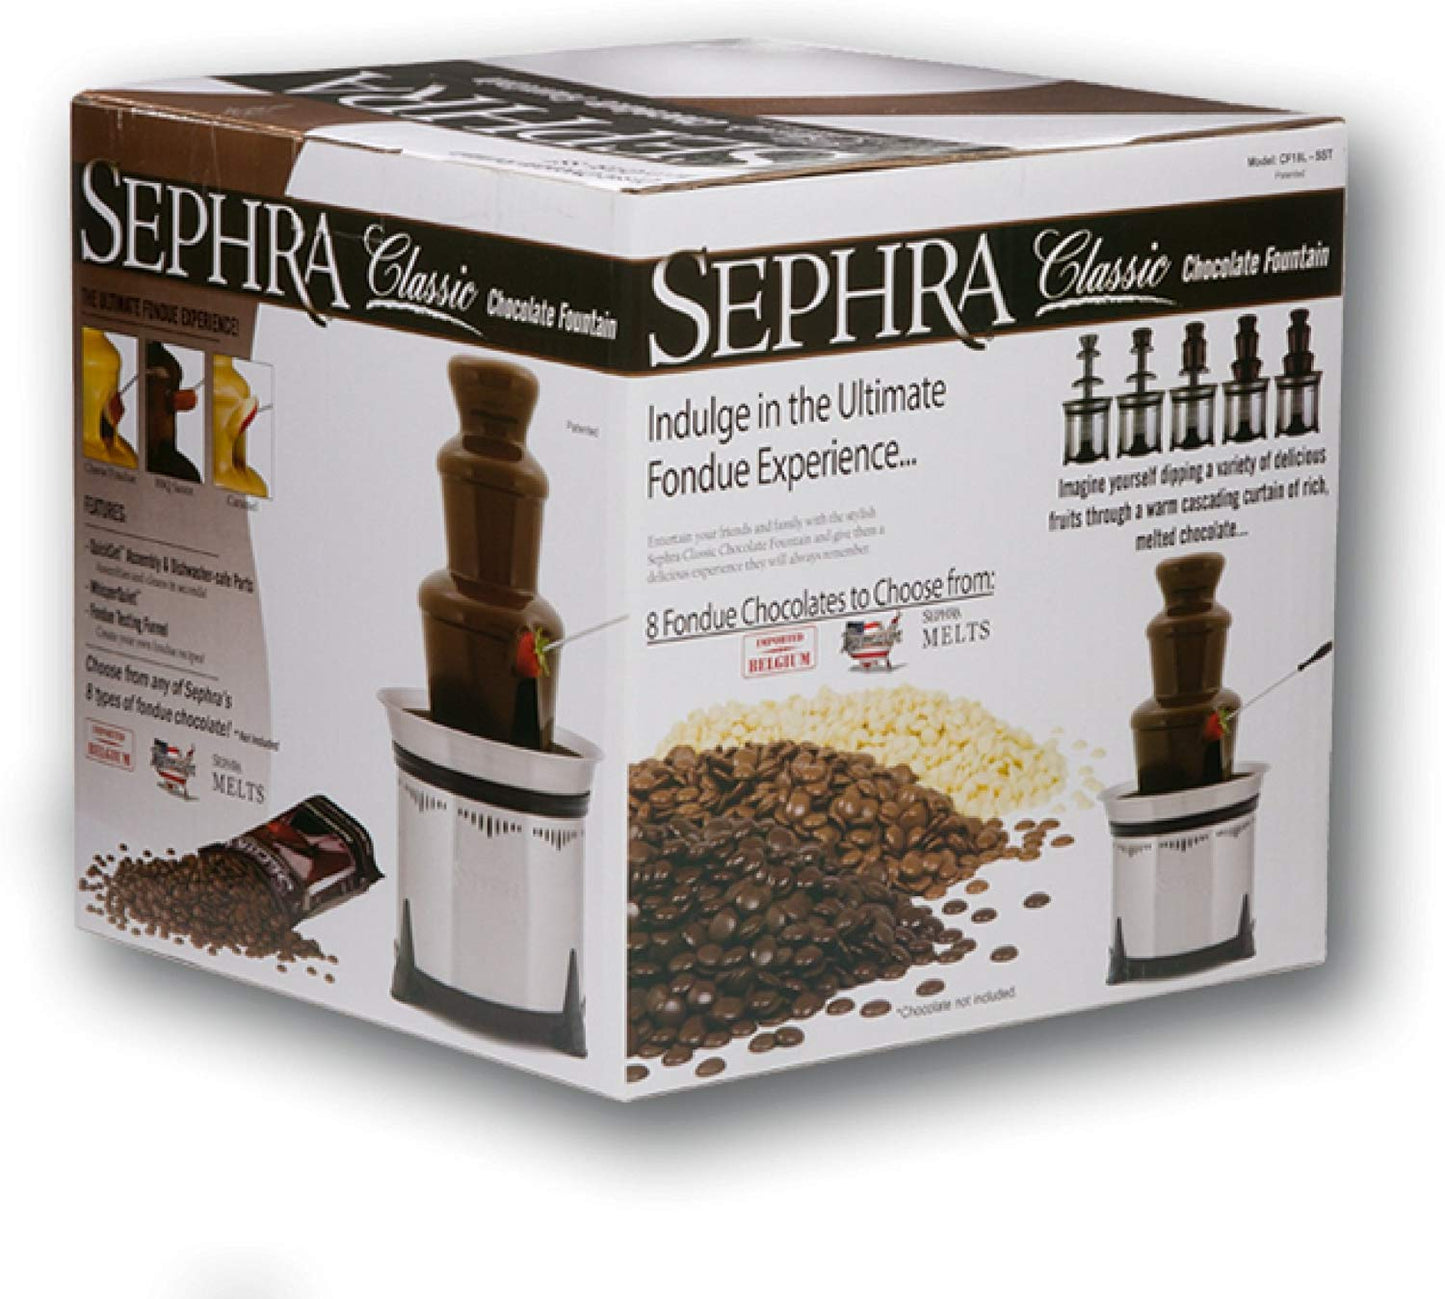 The carton box of Sephra Classic CF18E Chocolate Fountain